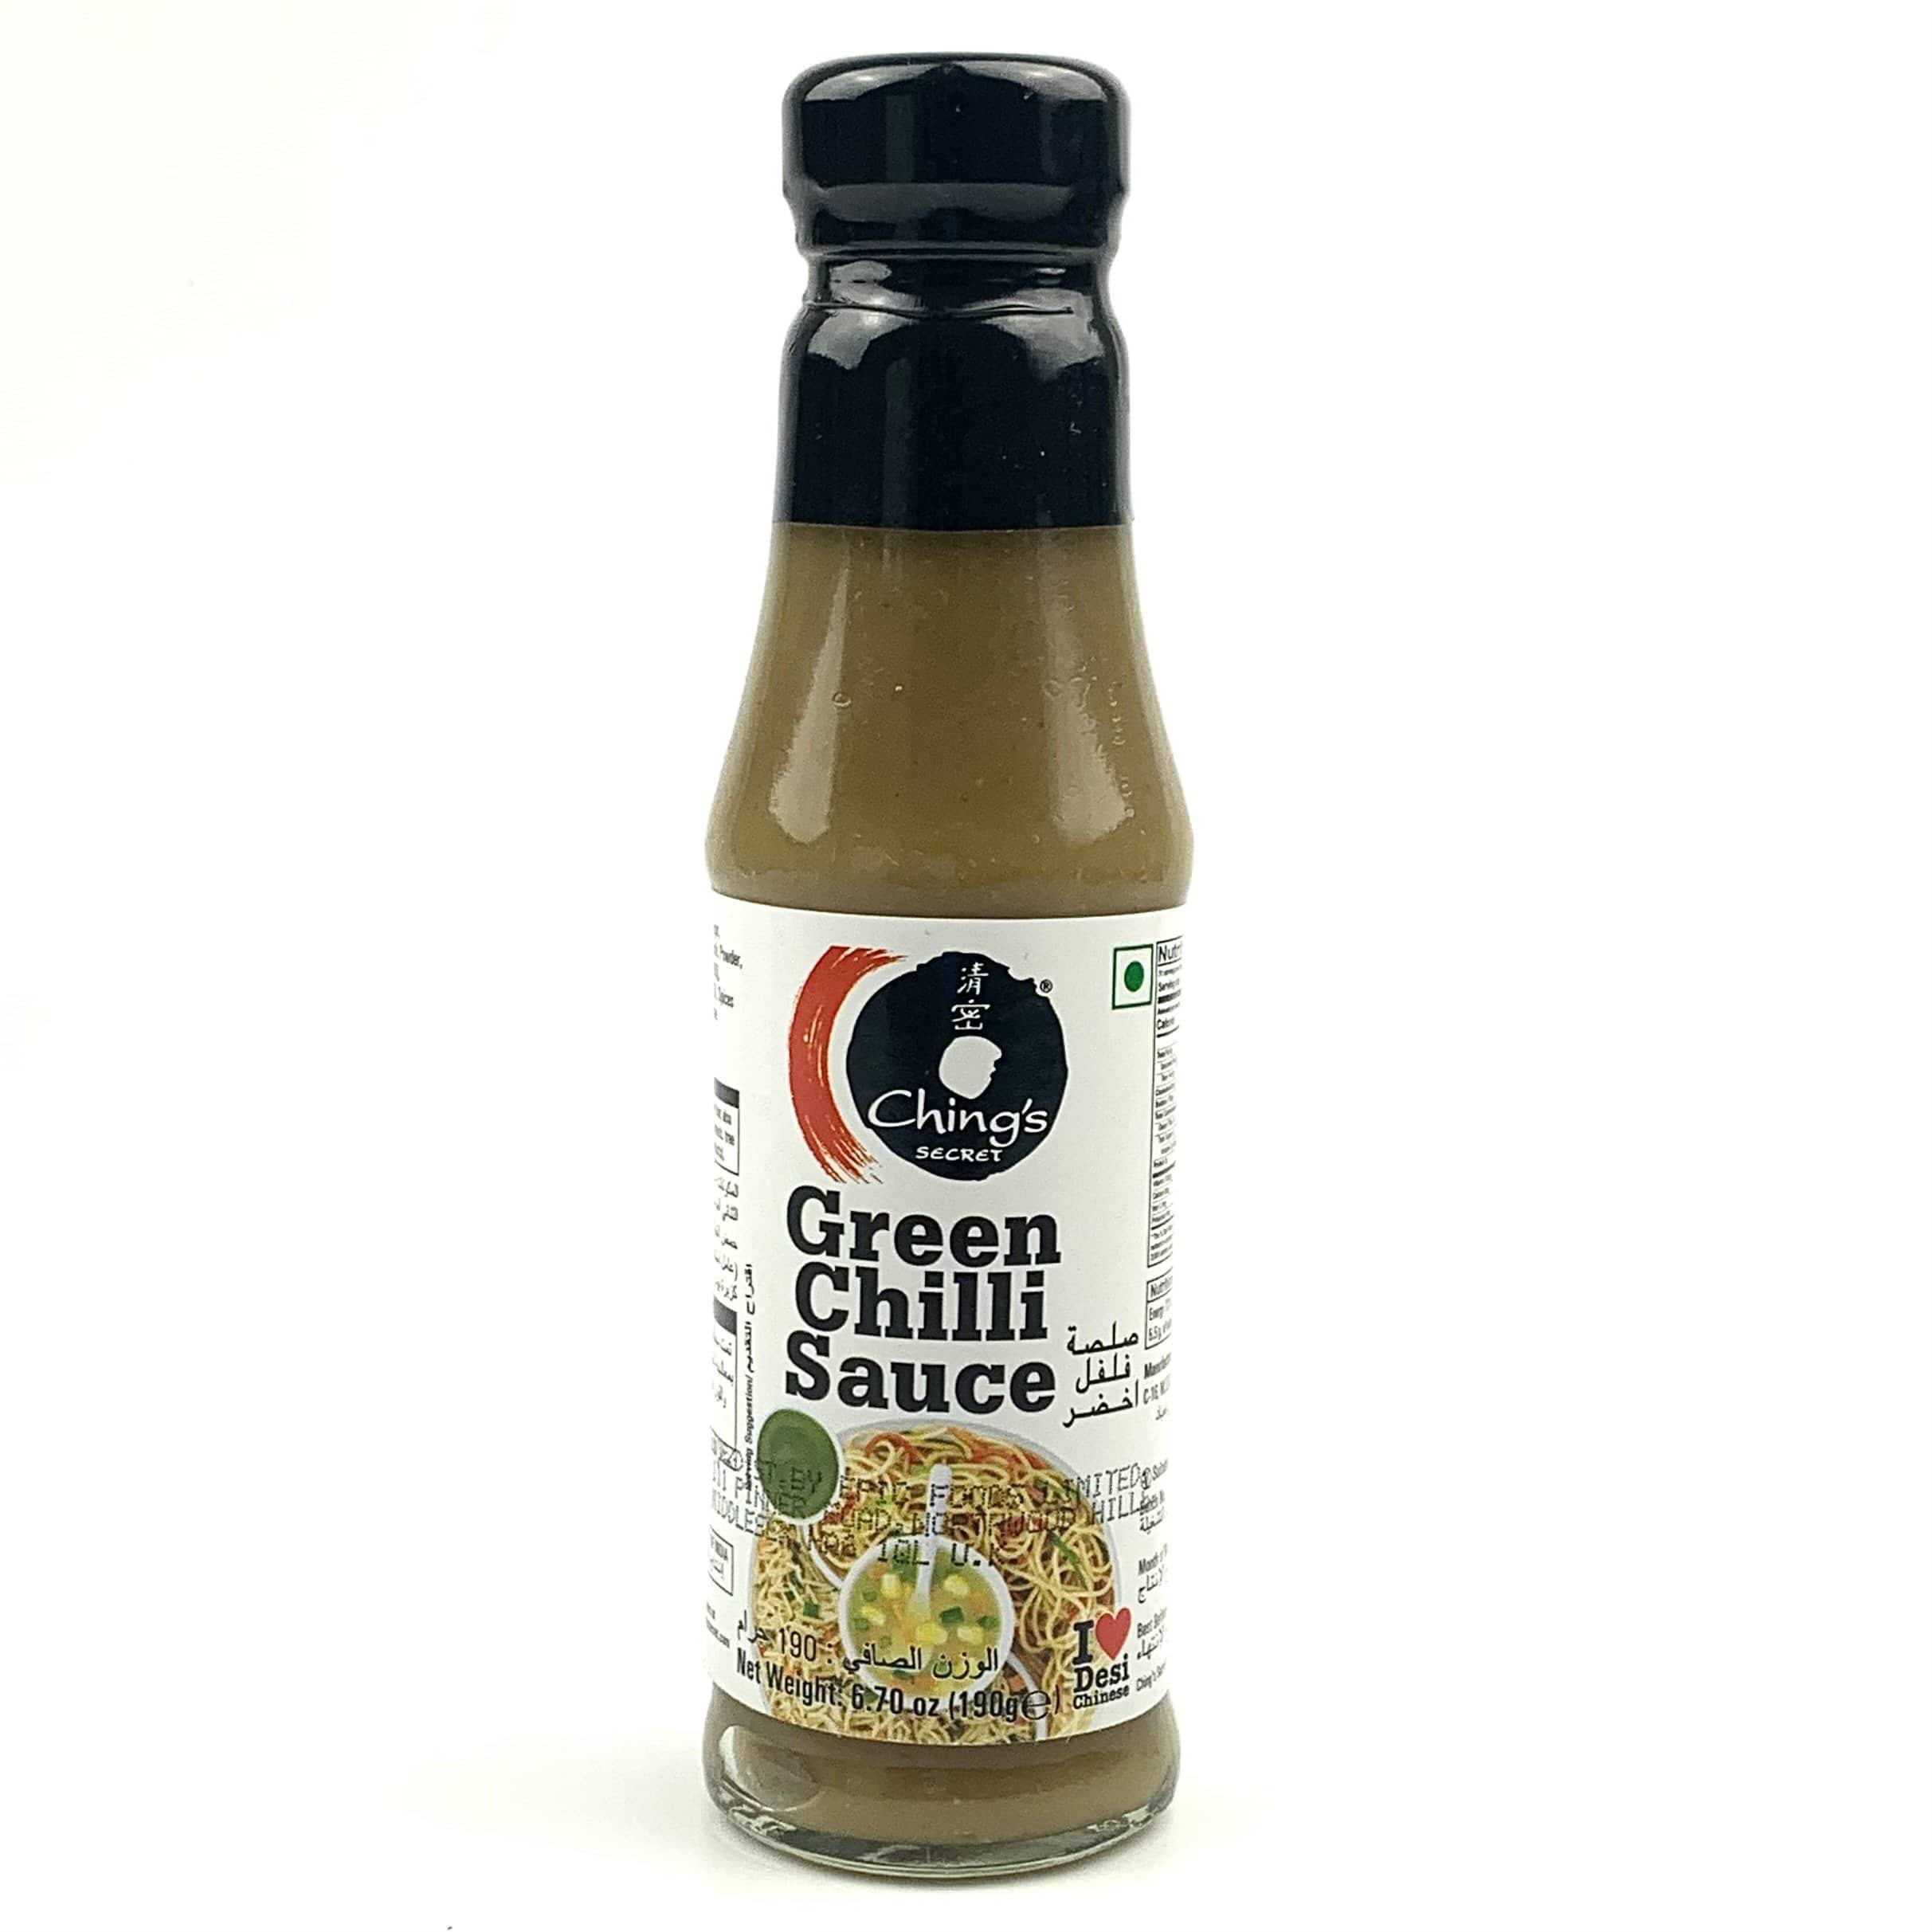 Chings Green Chilli Sauce - 190g